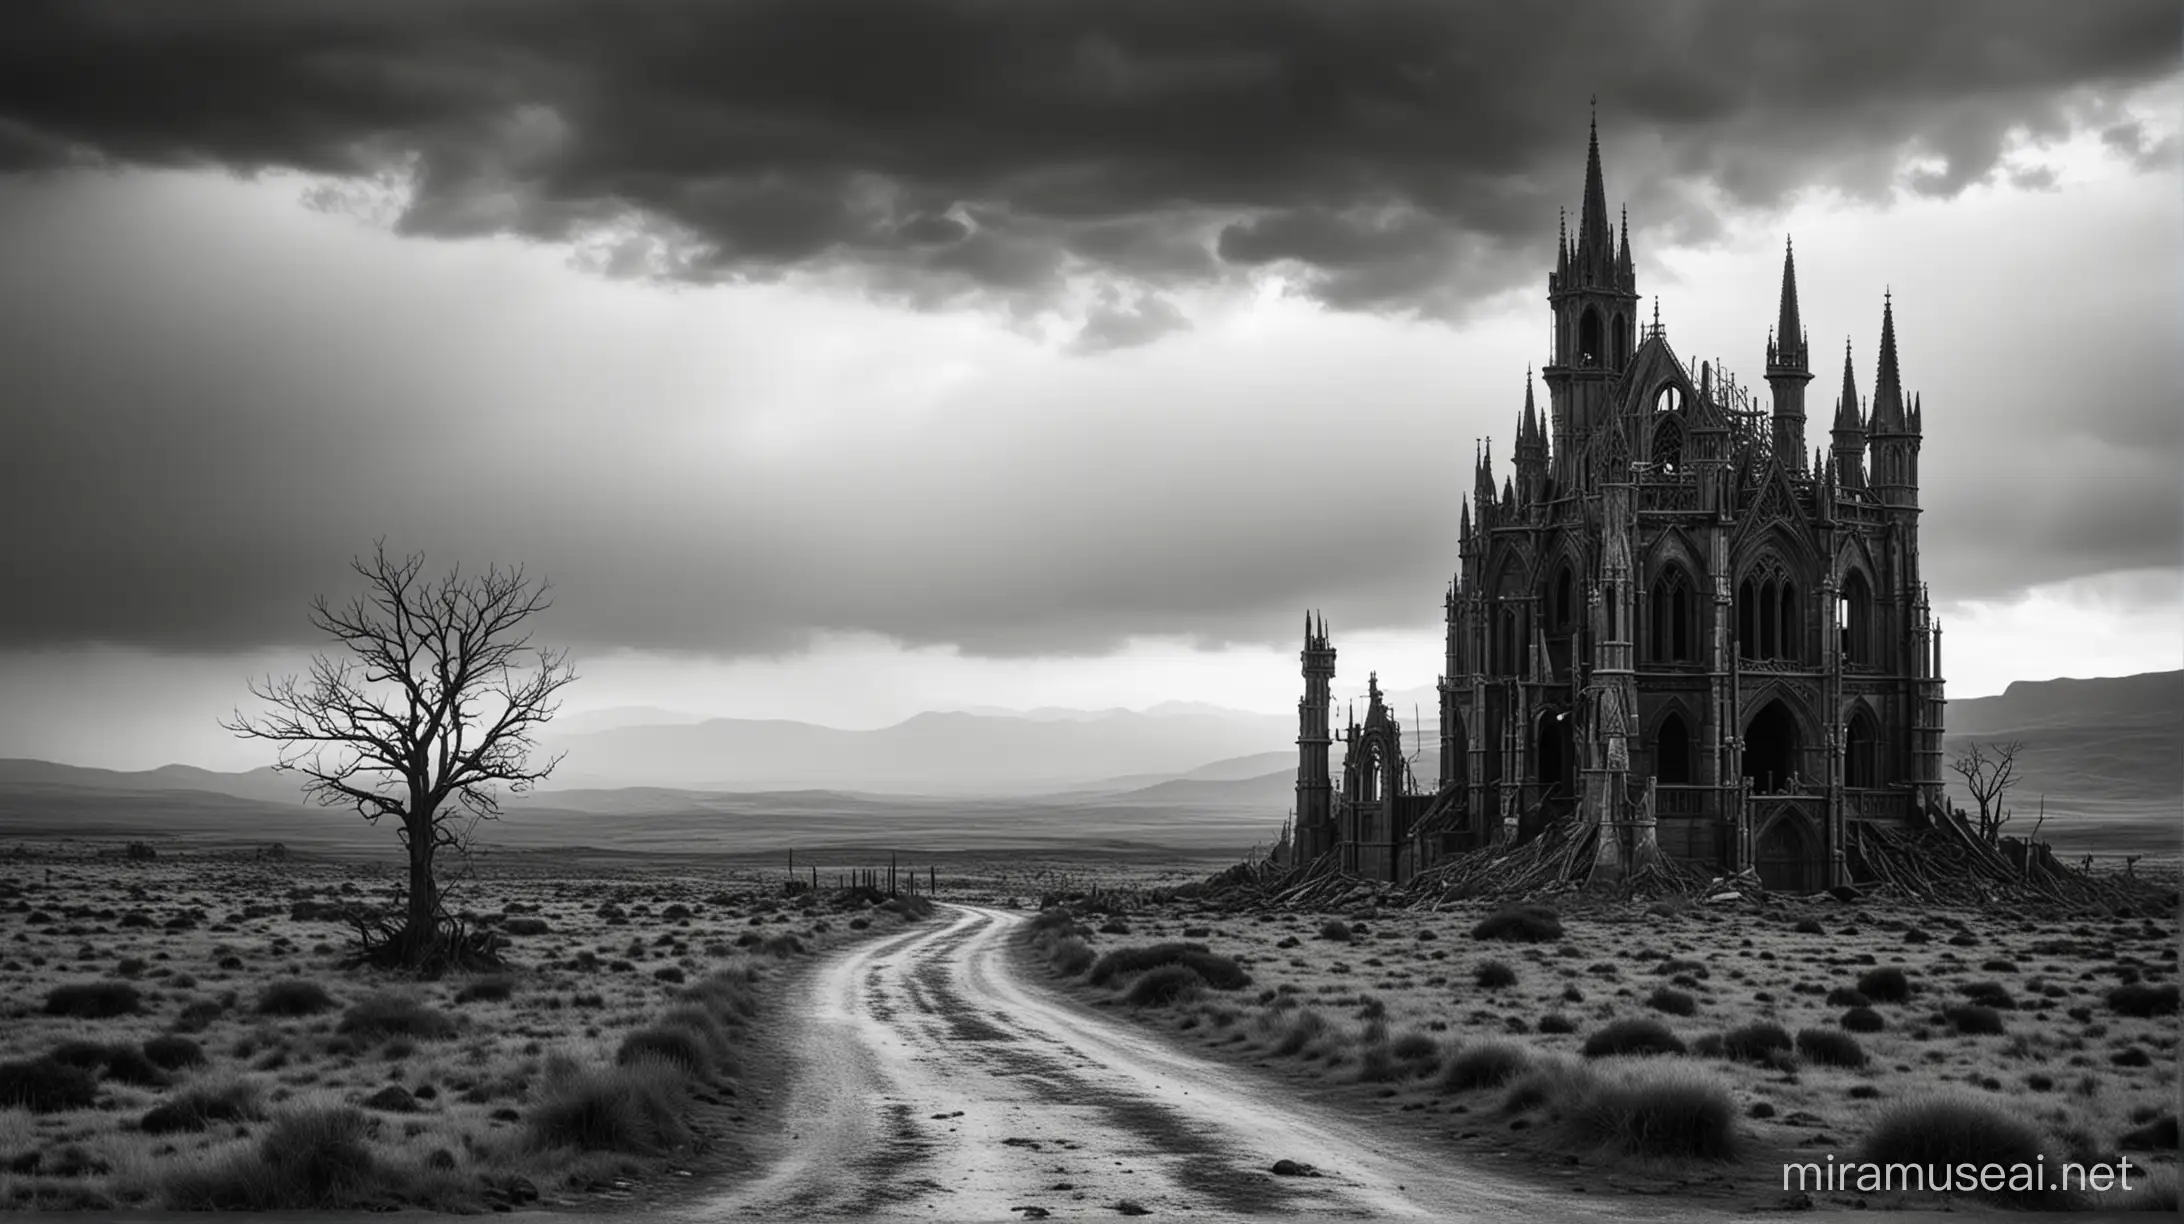 Desolate Gothic Landscape in Black and White